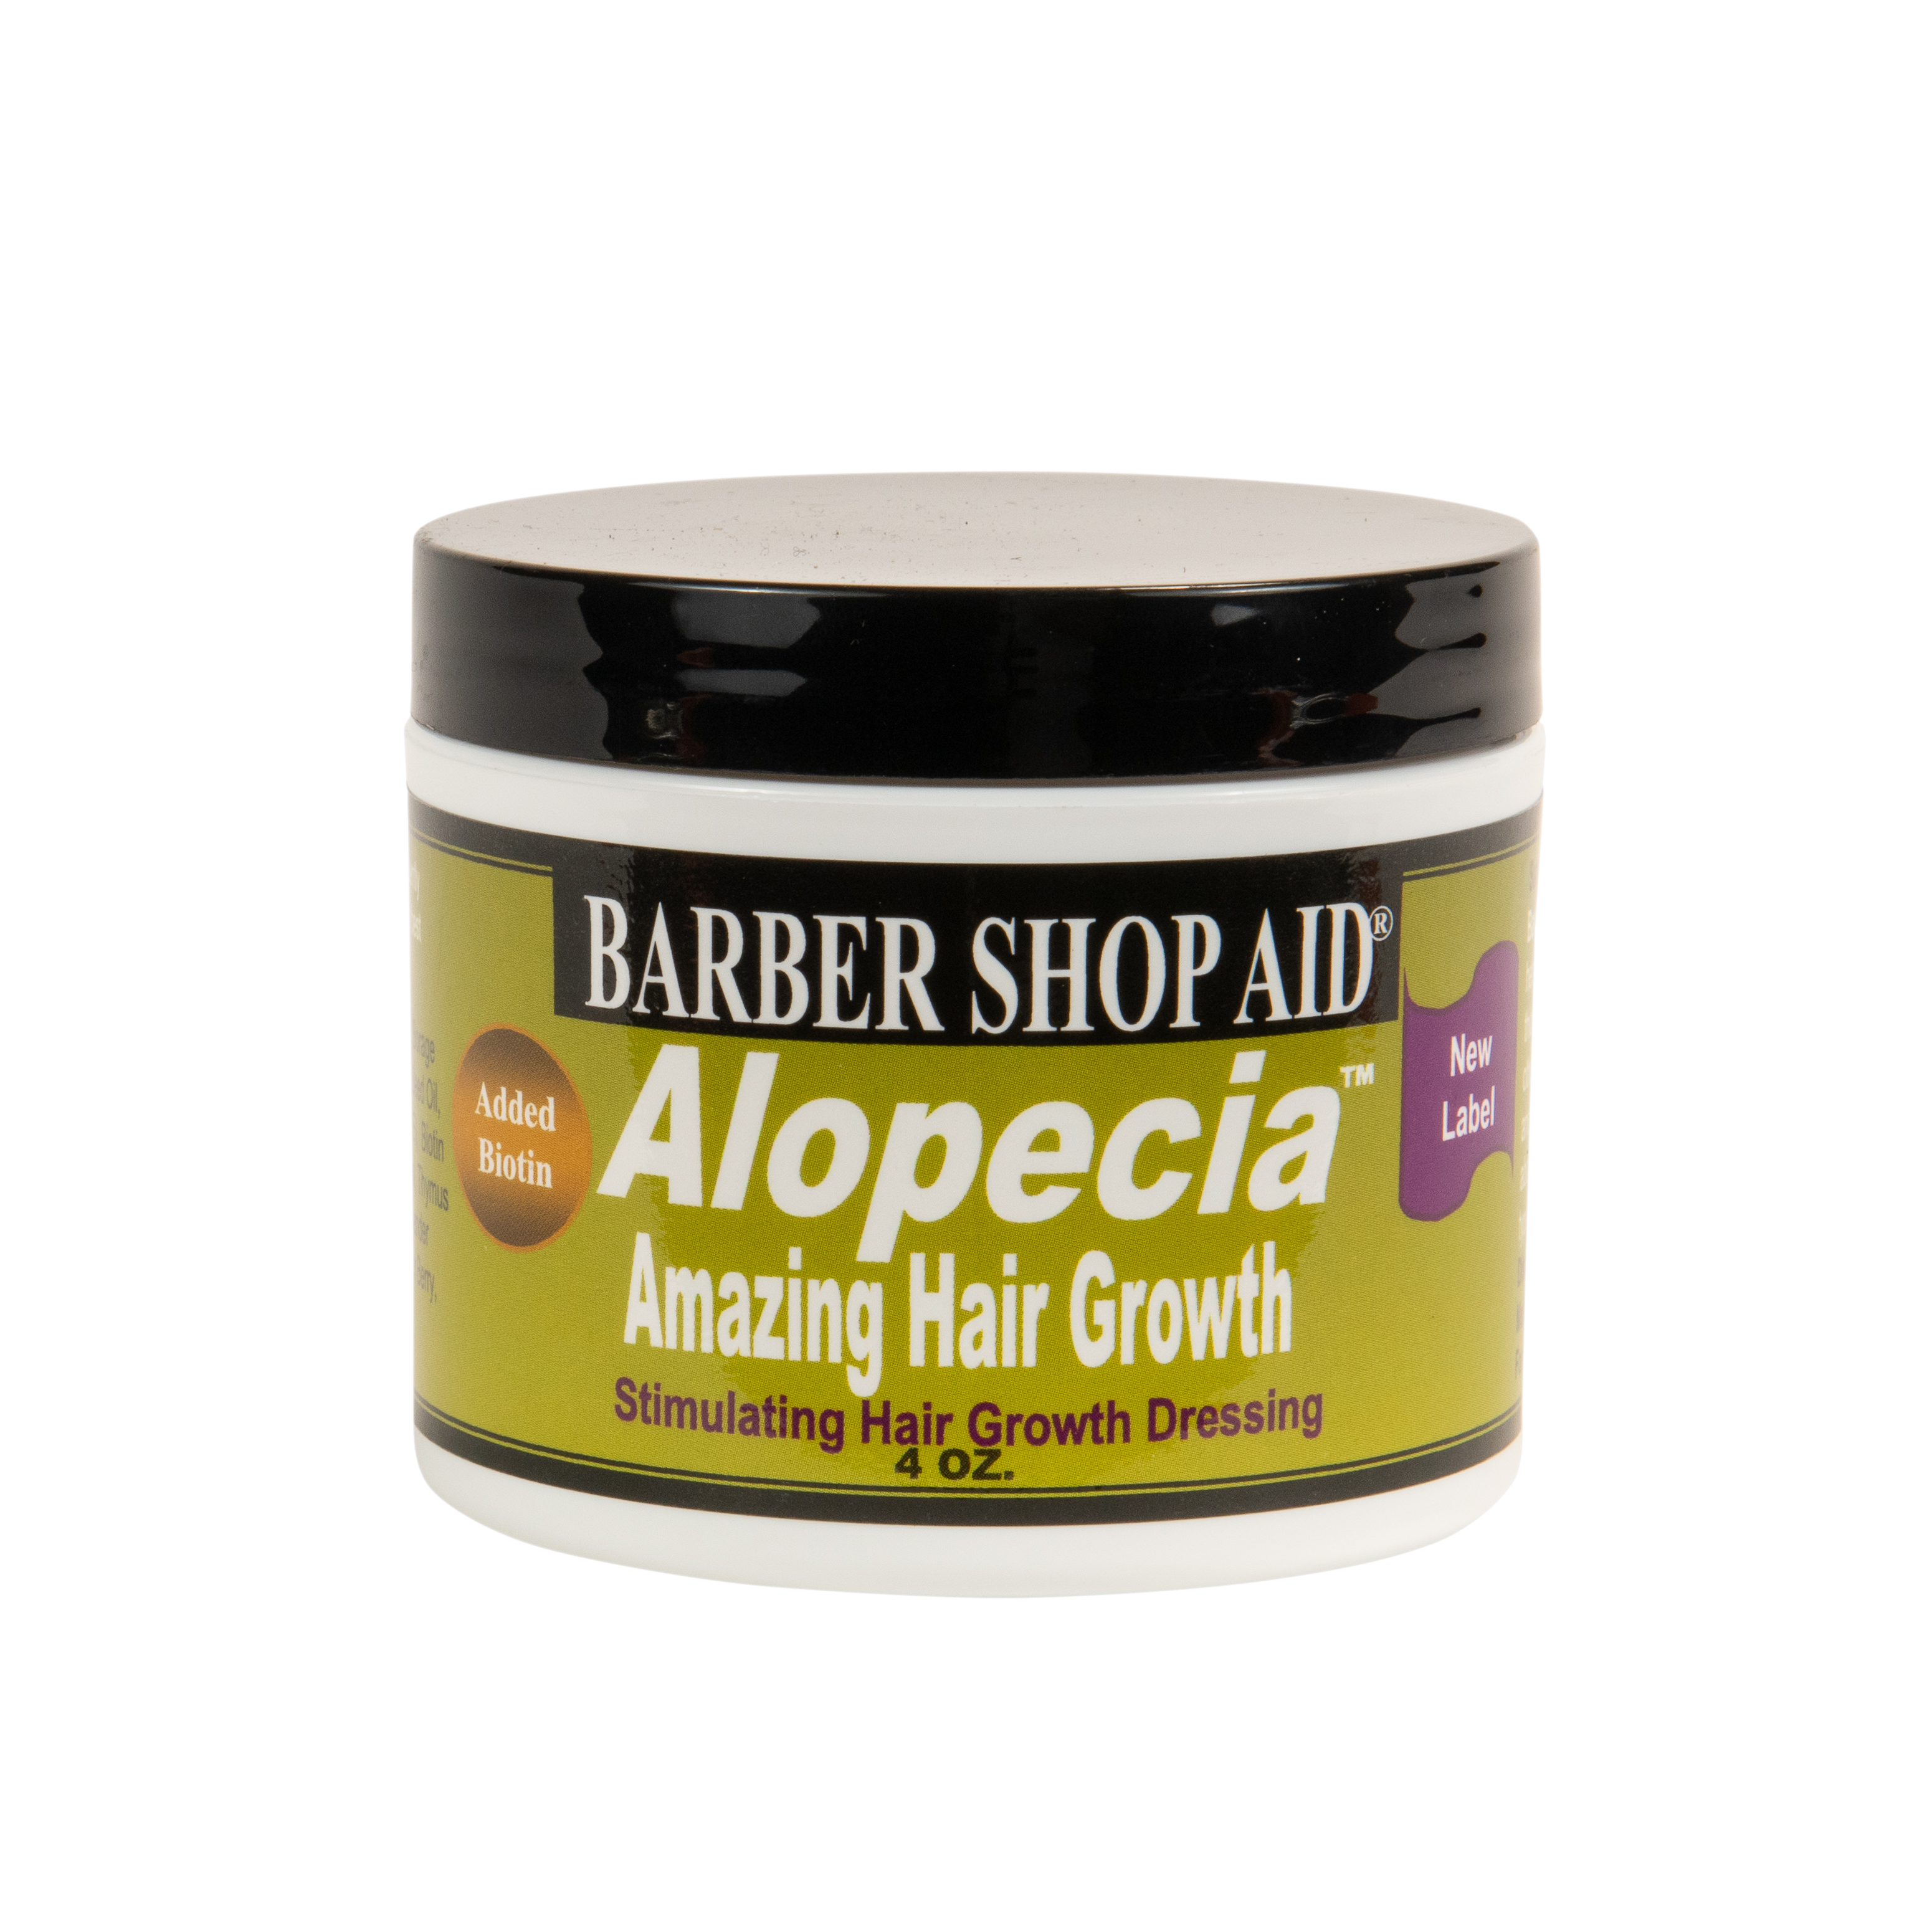 Barber Shop Aid Alopecia Hair Growth Dressing